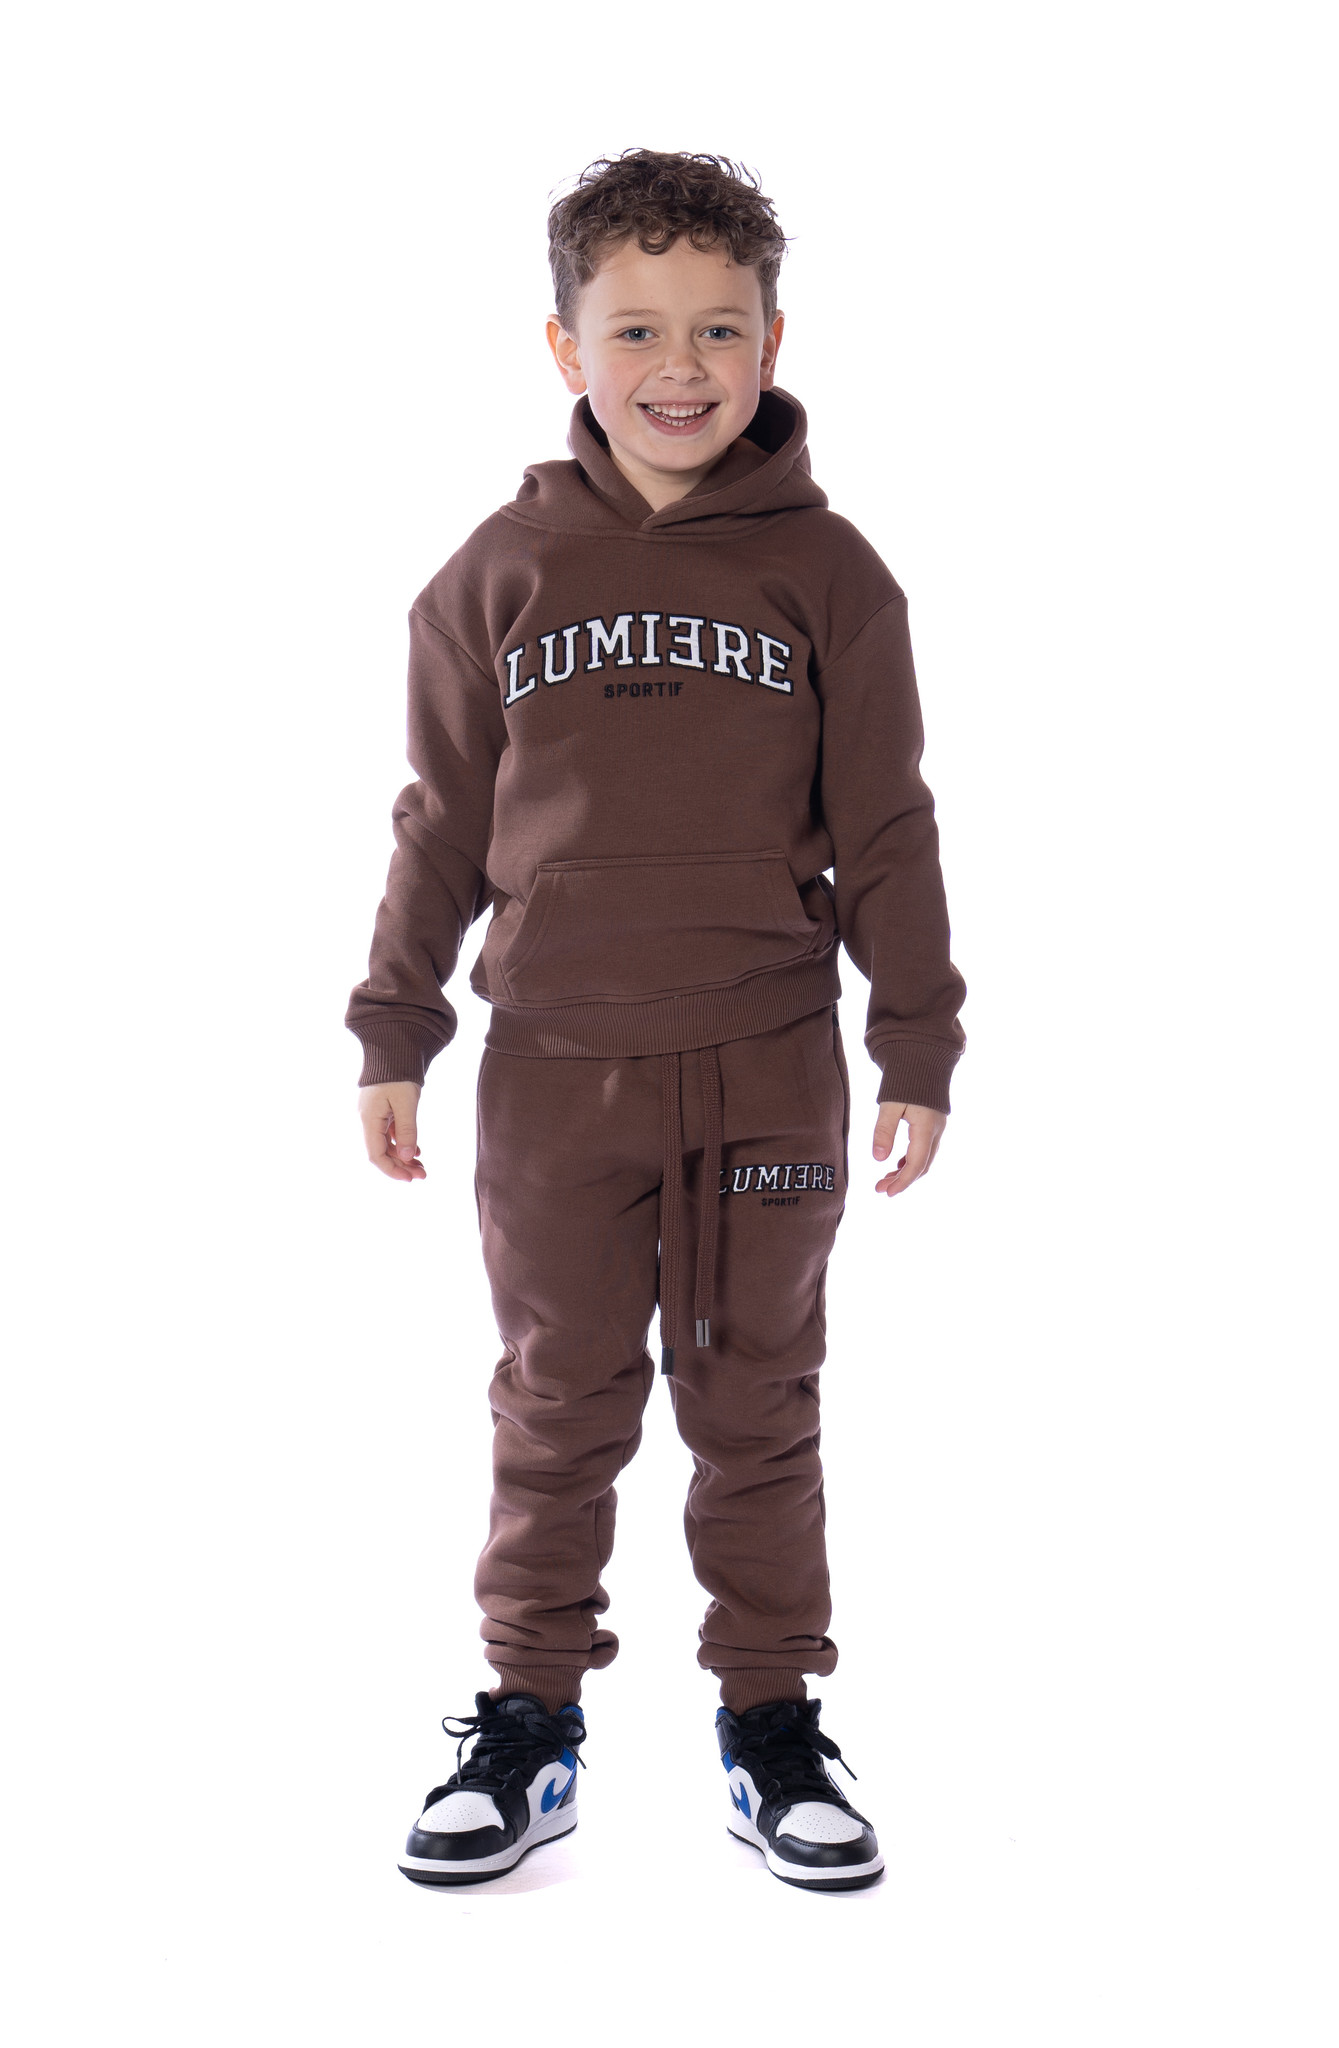 Lumi3re Sportif Kids Dark Brown - LUMI3RE